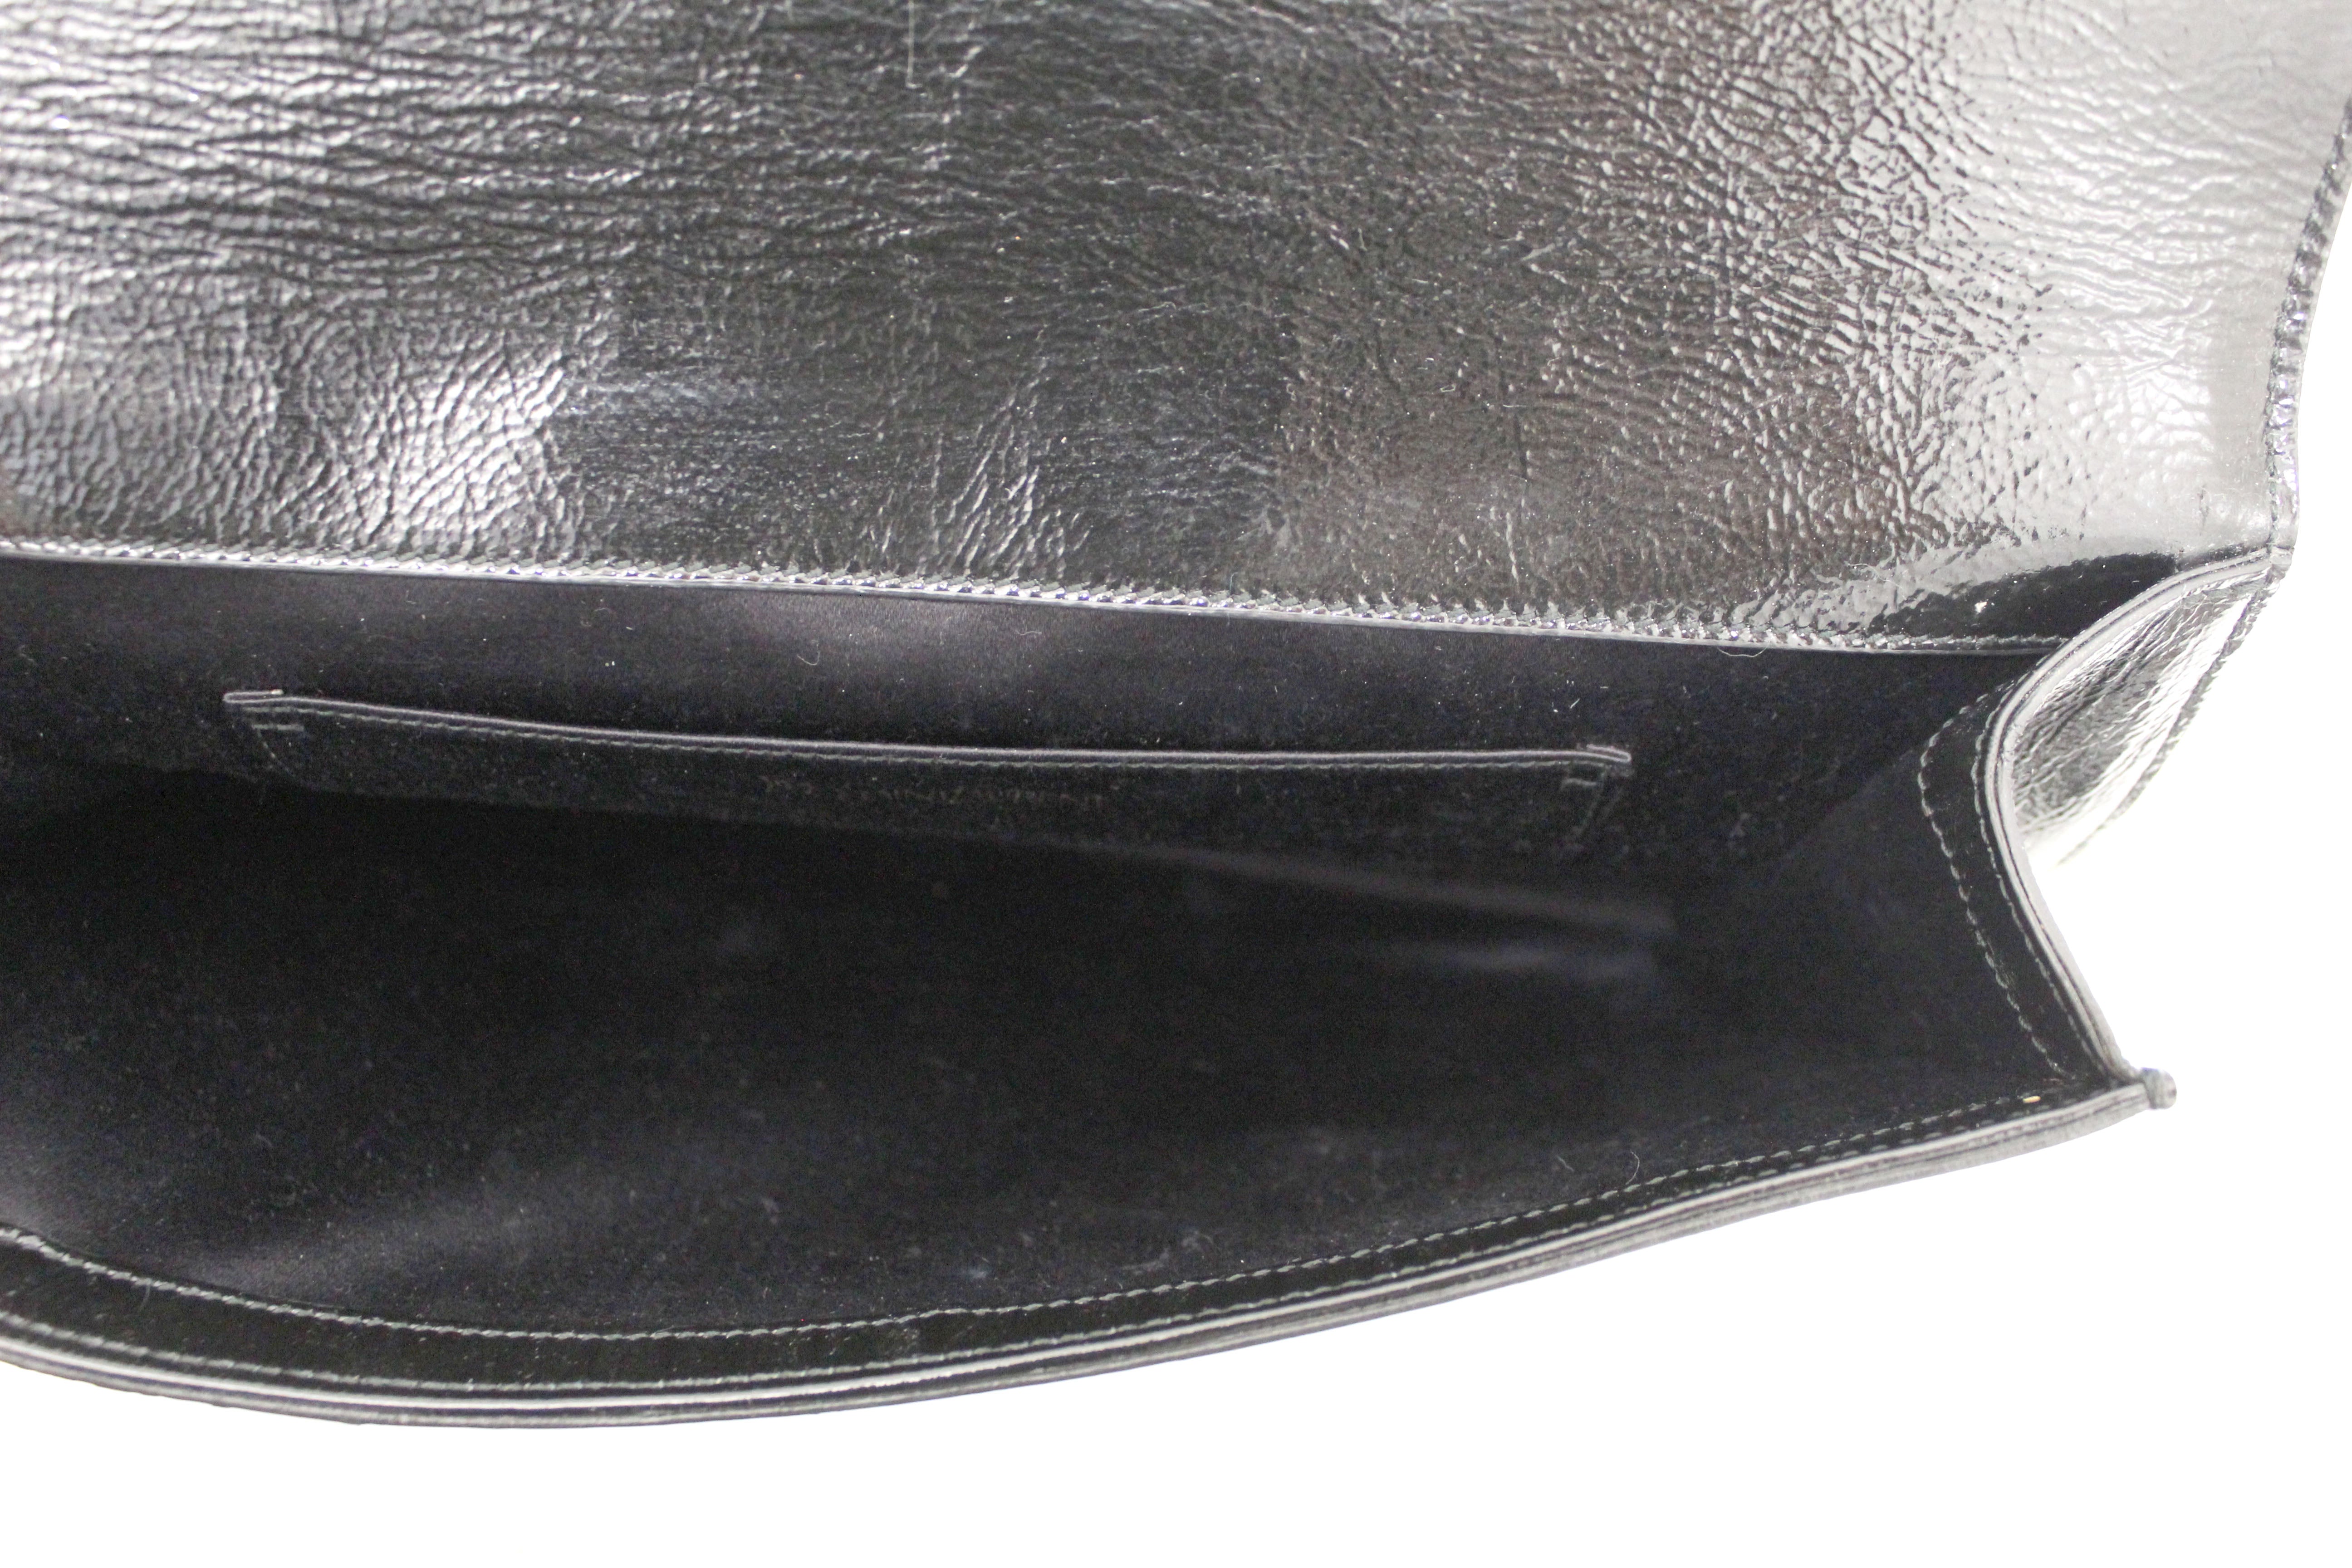 Authentic YSL Yves Saint Laurent Black Patent Leather Clutch Bag